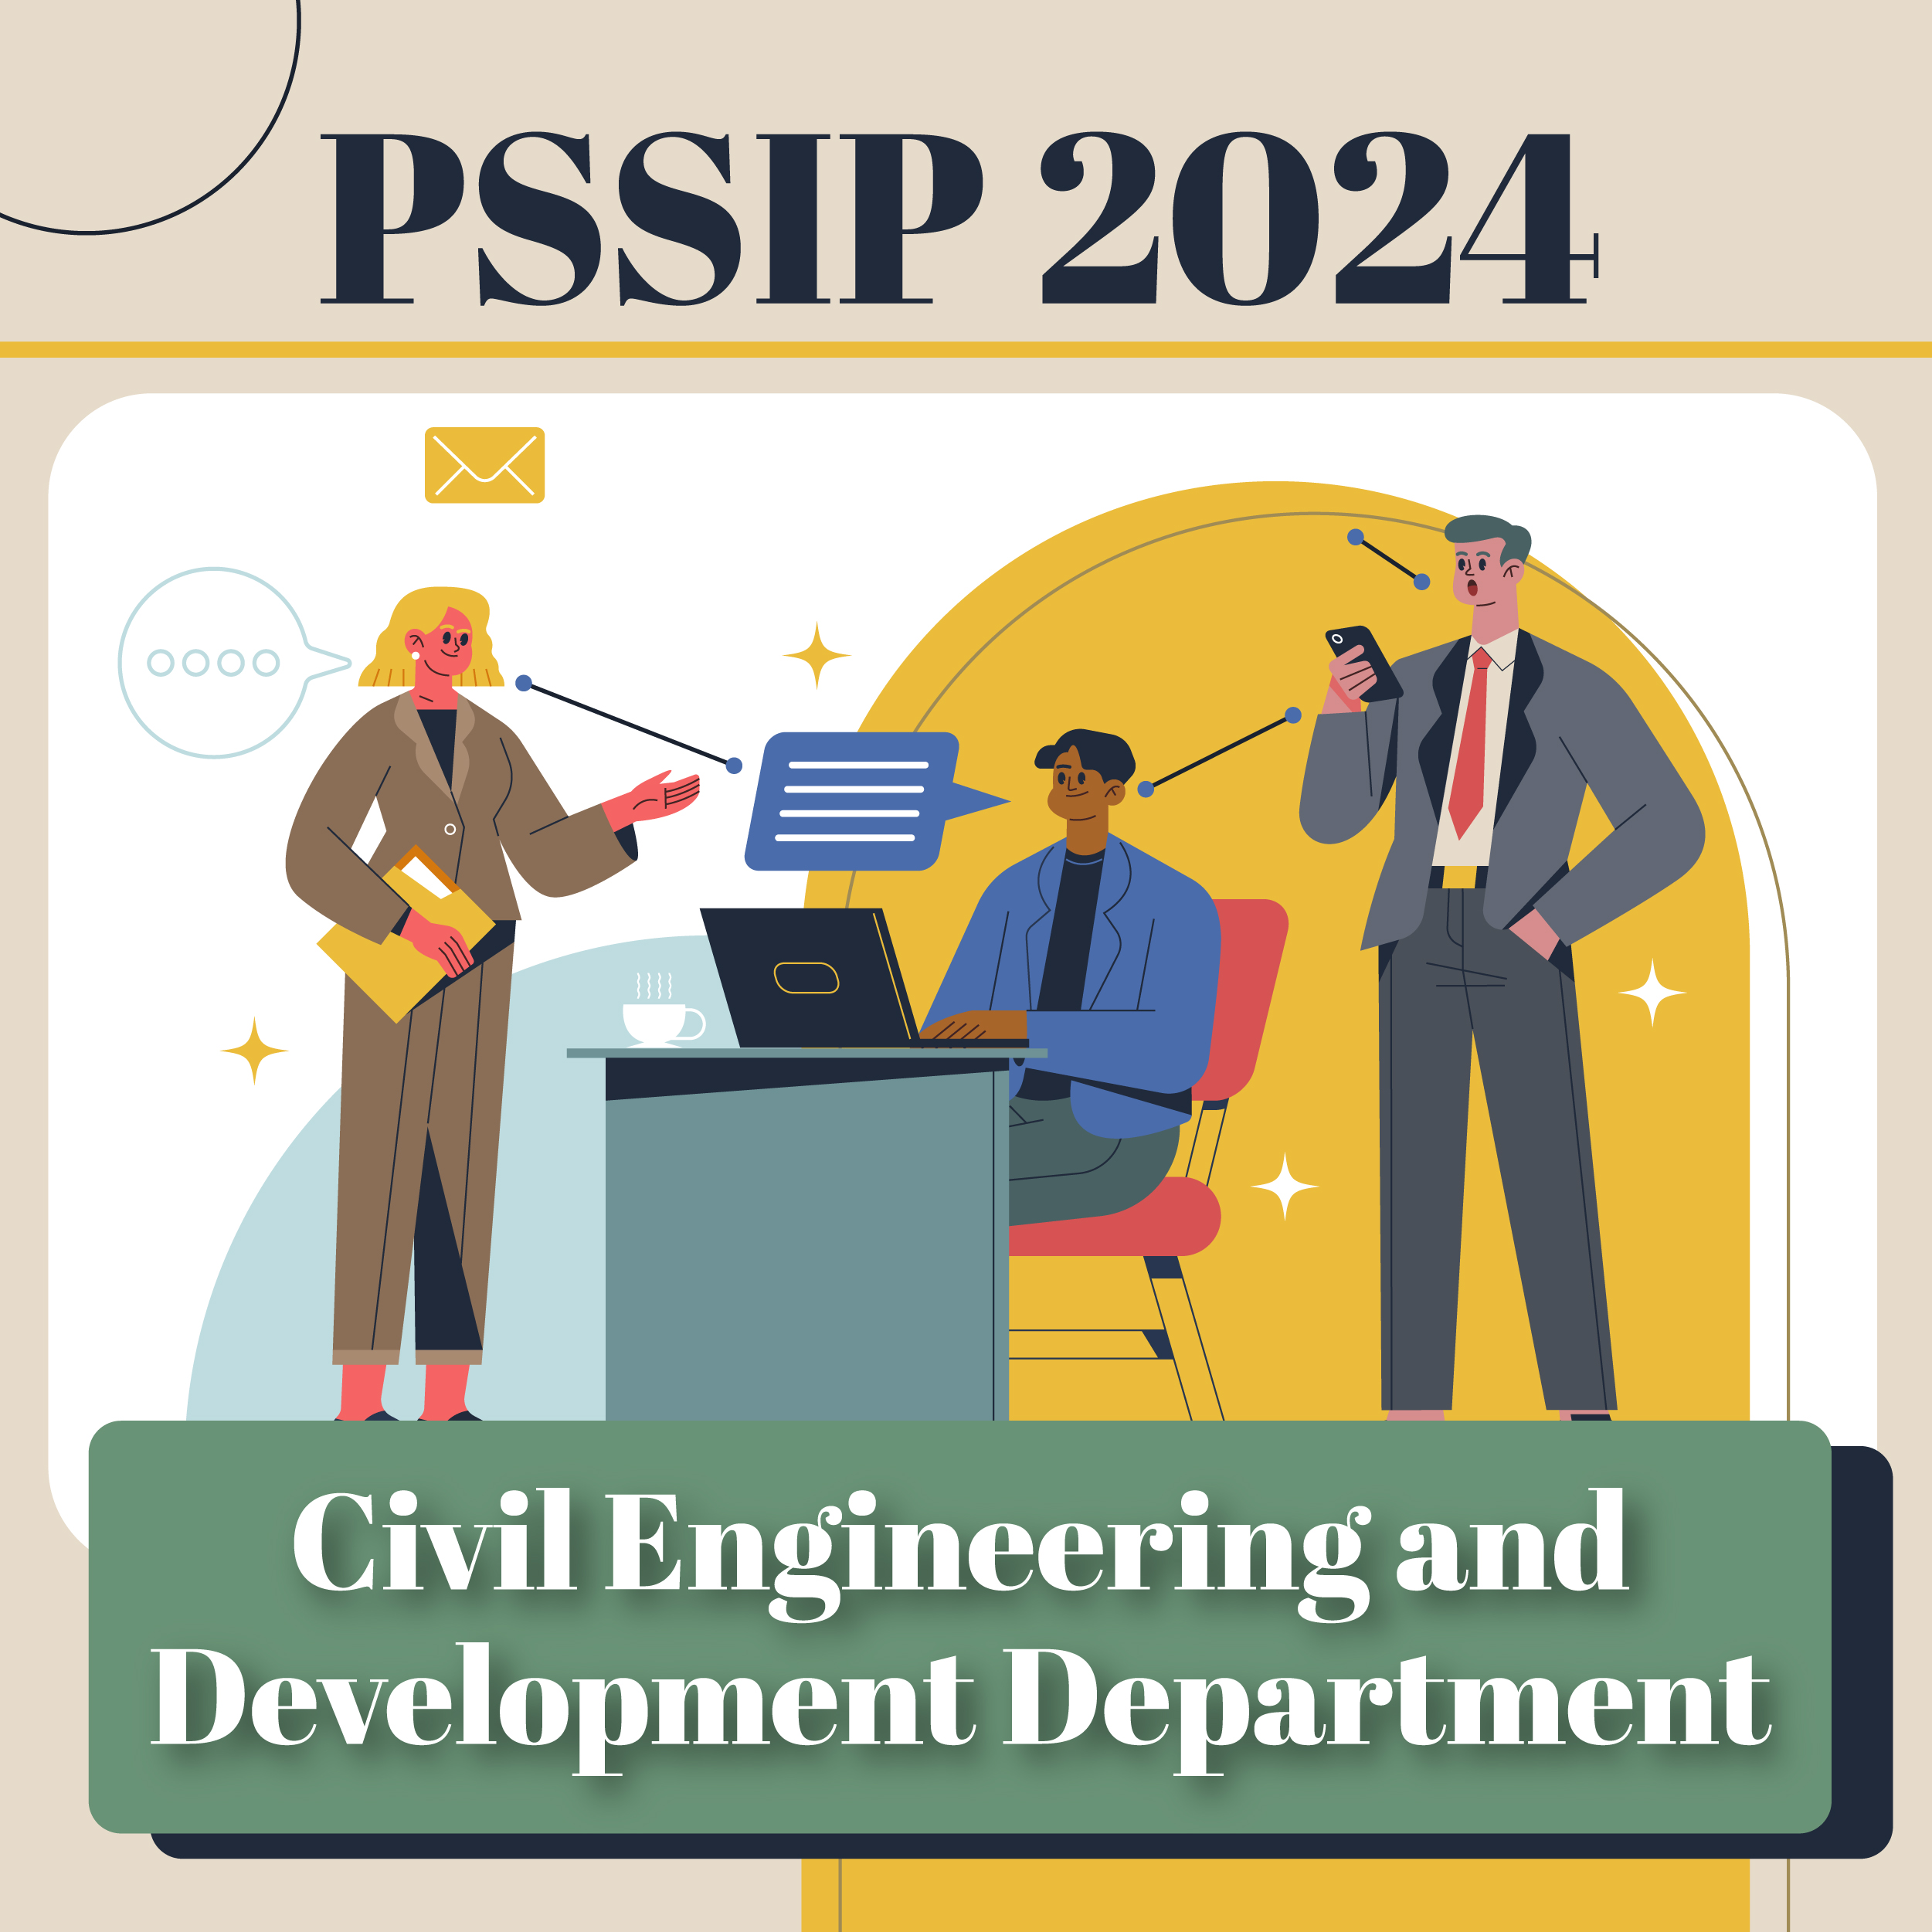 PSSIP2024 – Civil Engineering and Development Department